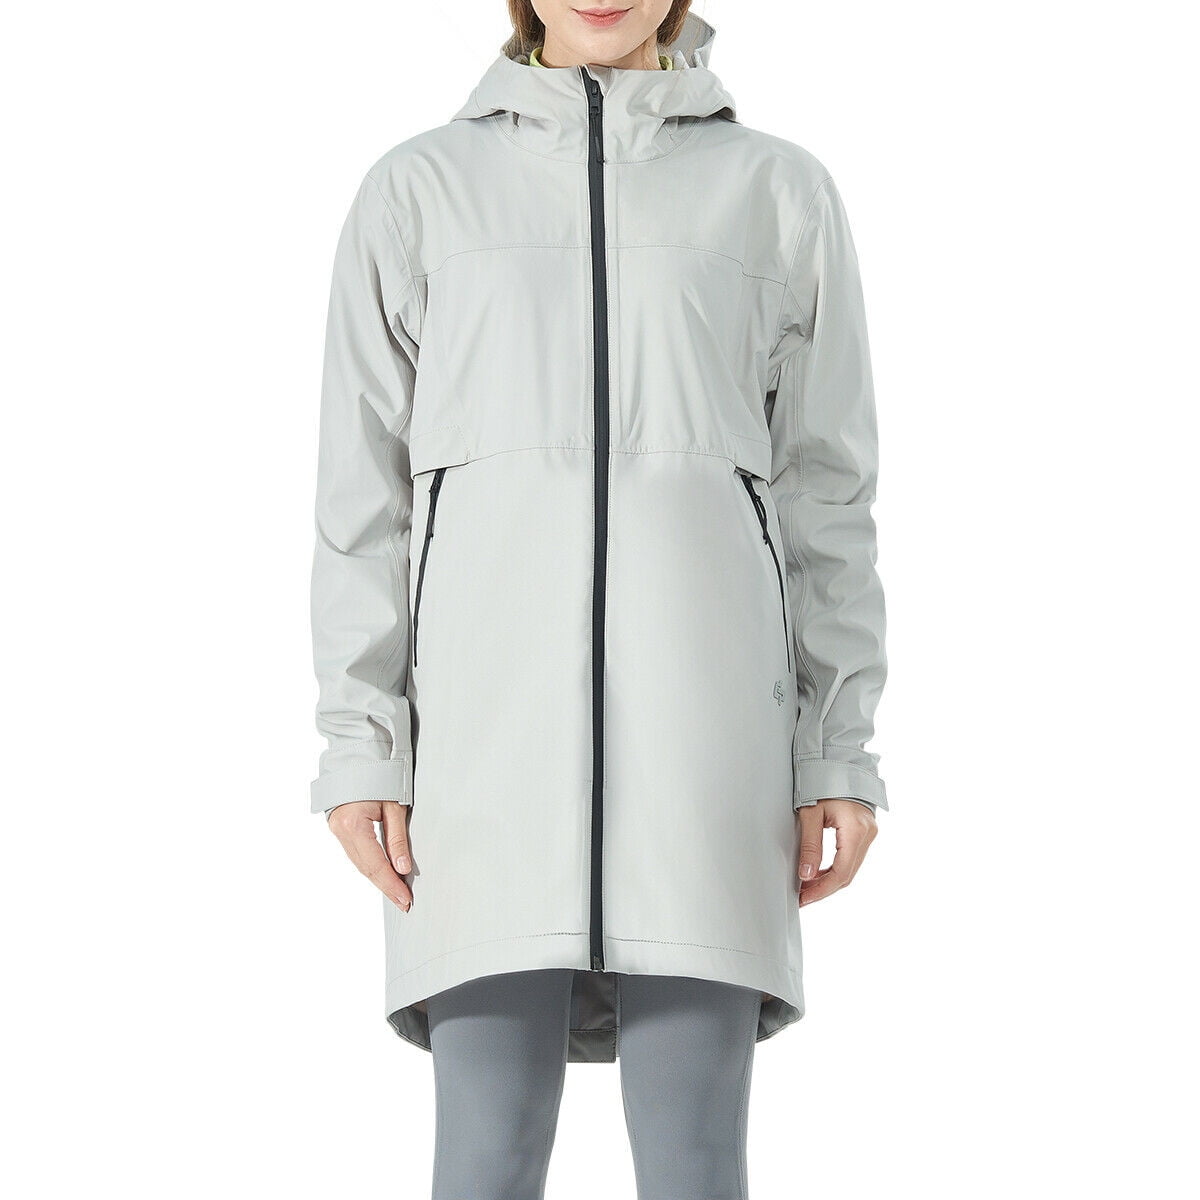 UUANG Womens Waterproof Rain Jacket Hooded Raincoat Lined Outdoor Windbreaker Long Sleeve Zipped Trench Coats S-2XL 